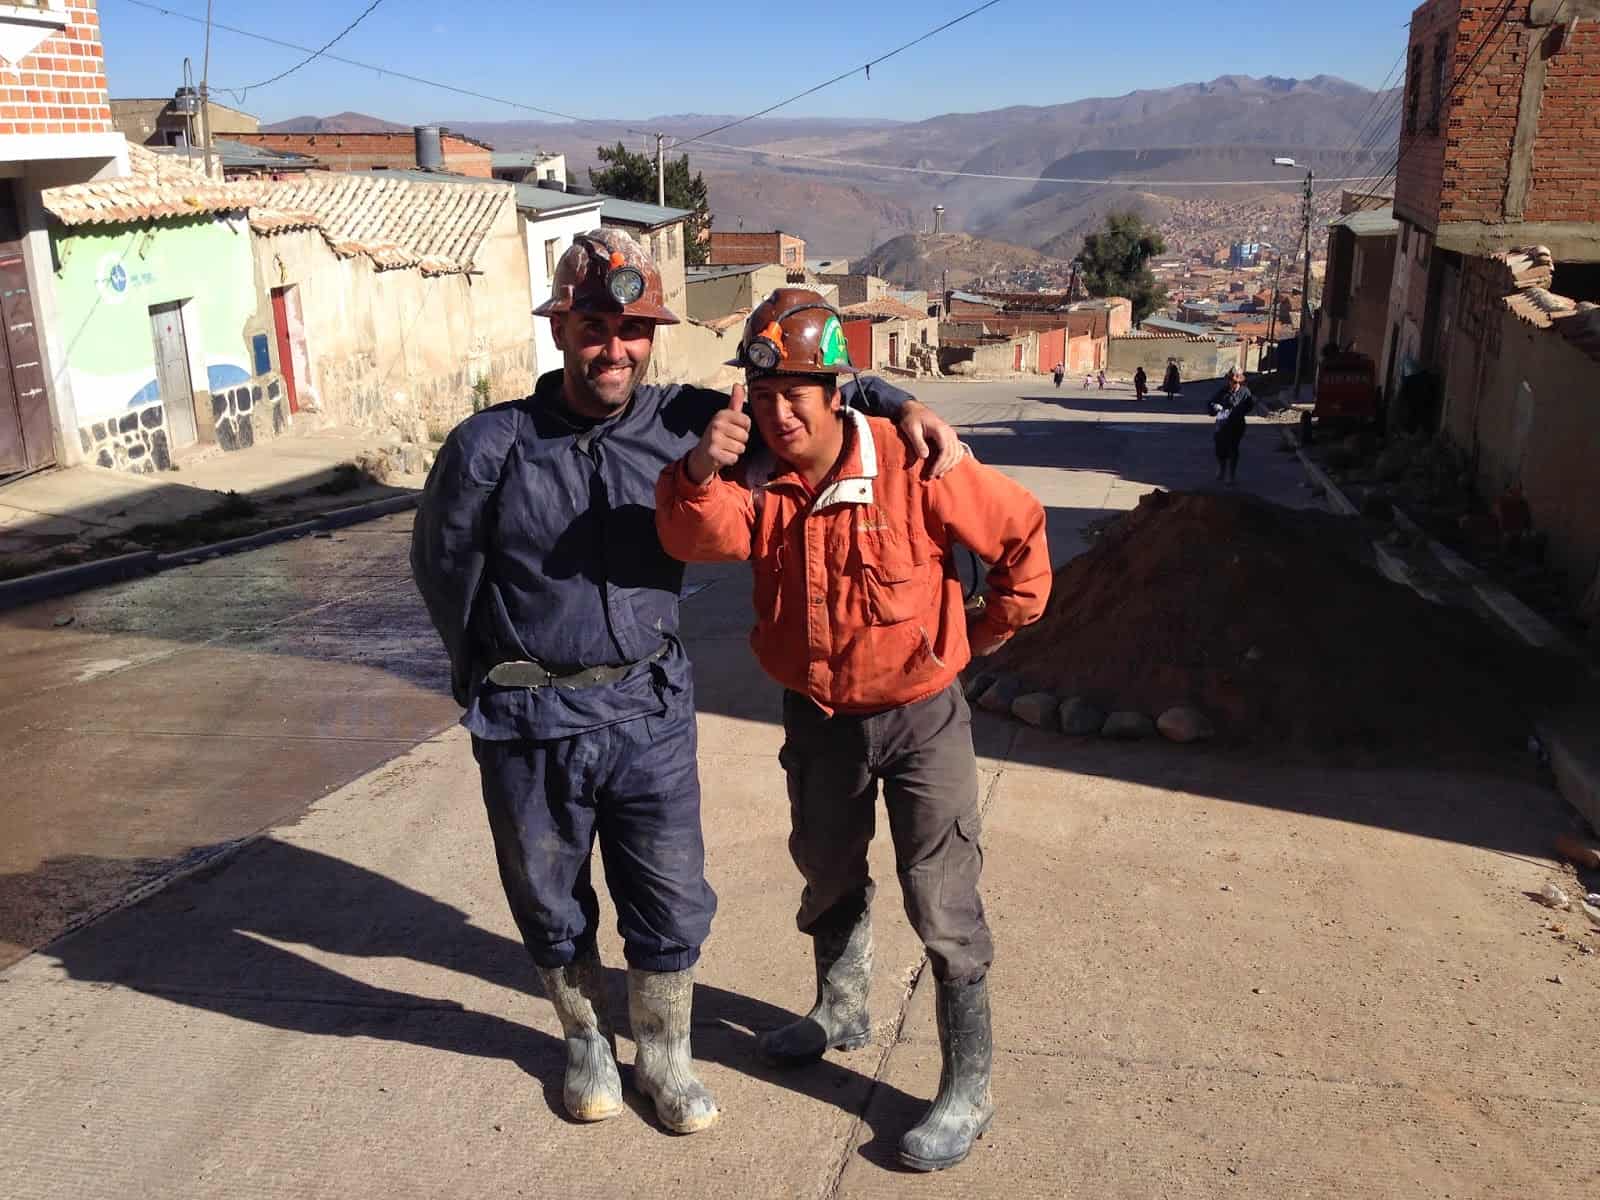 Me and Beto in Potosí, Bolivia